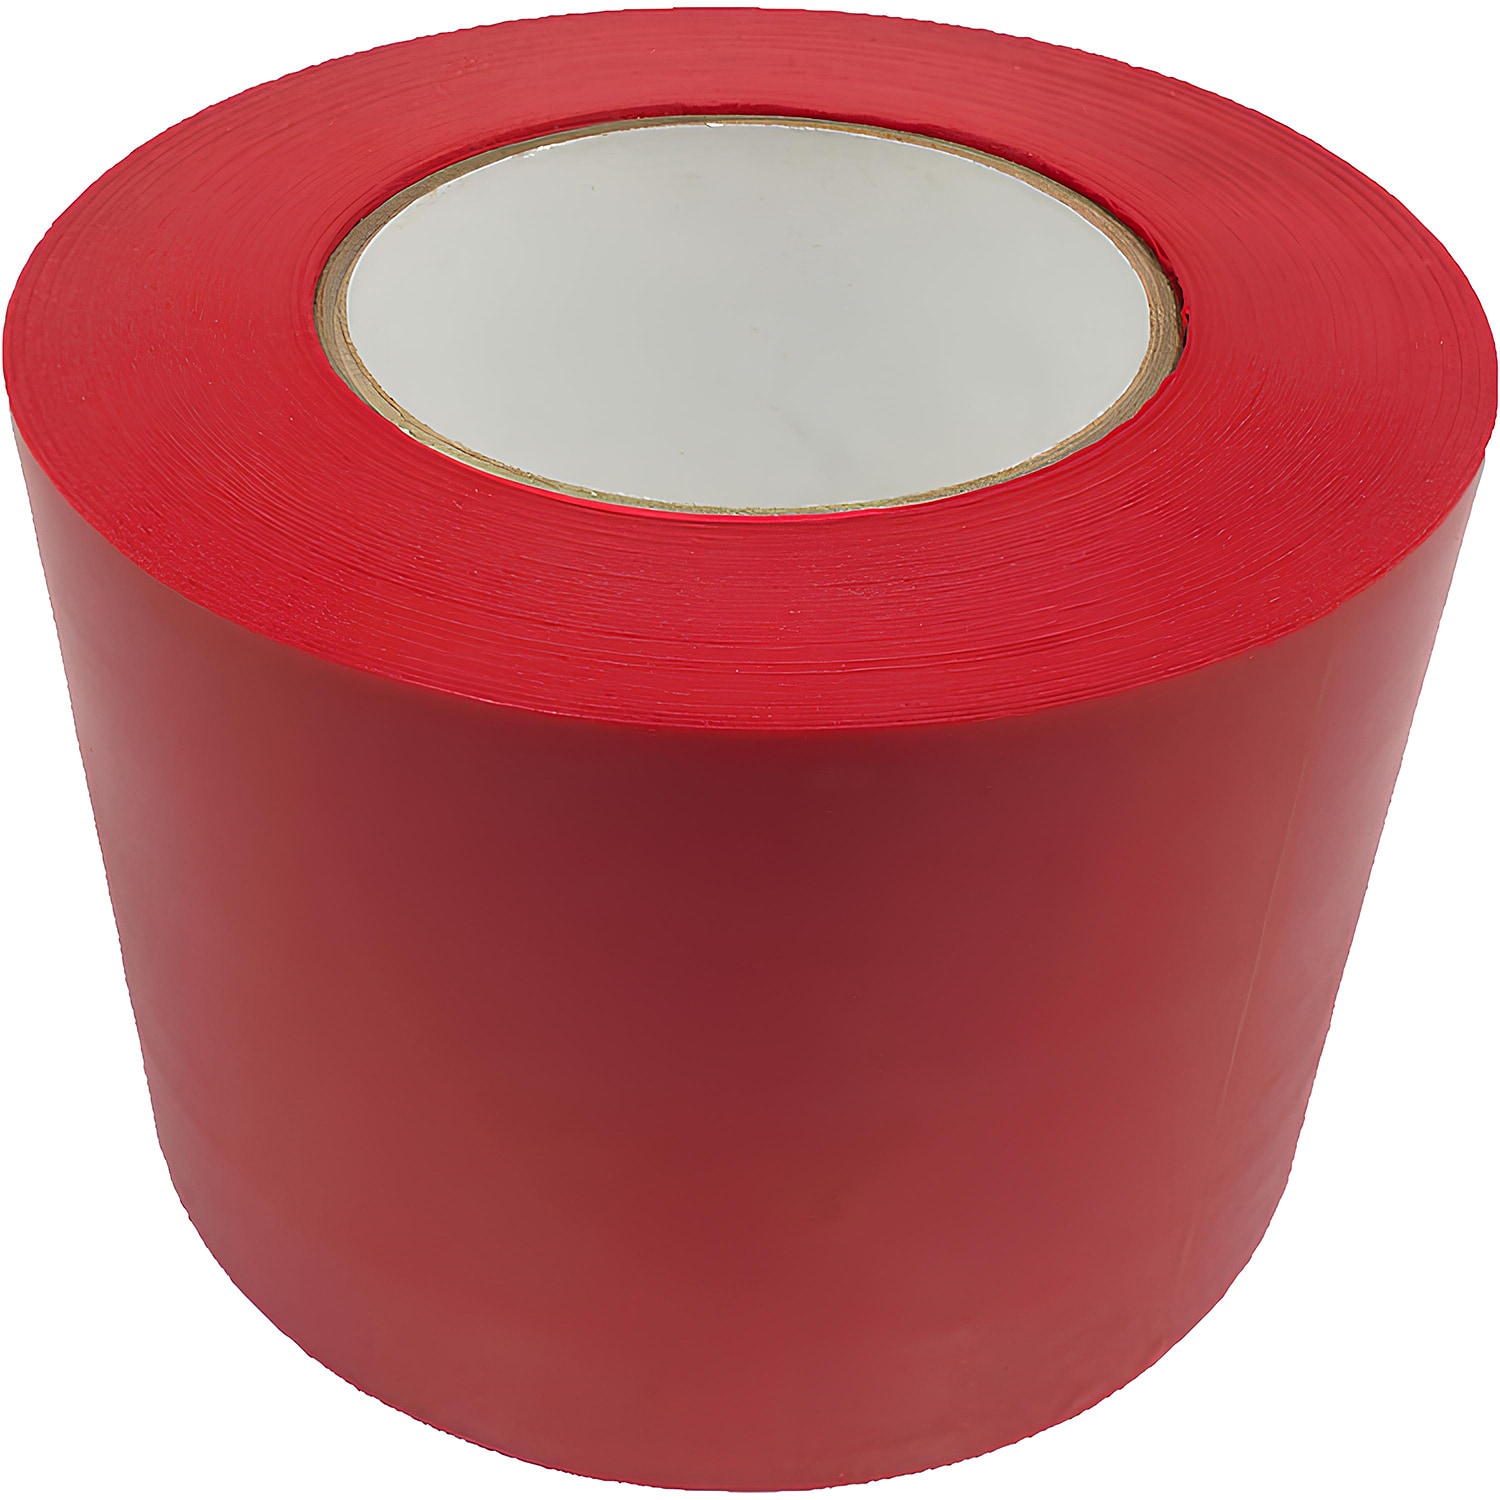 ELK Red Panel System Tape, 4-in x 180 ft, Moisture Resistant, UV